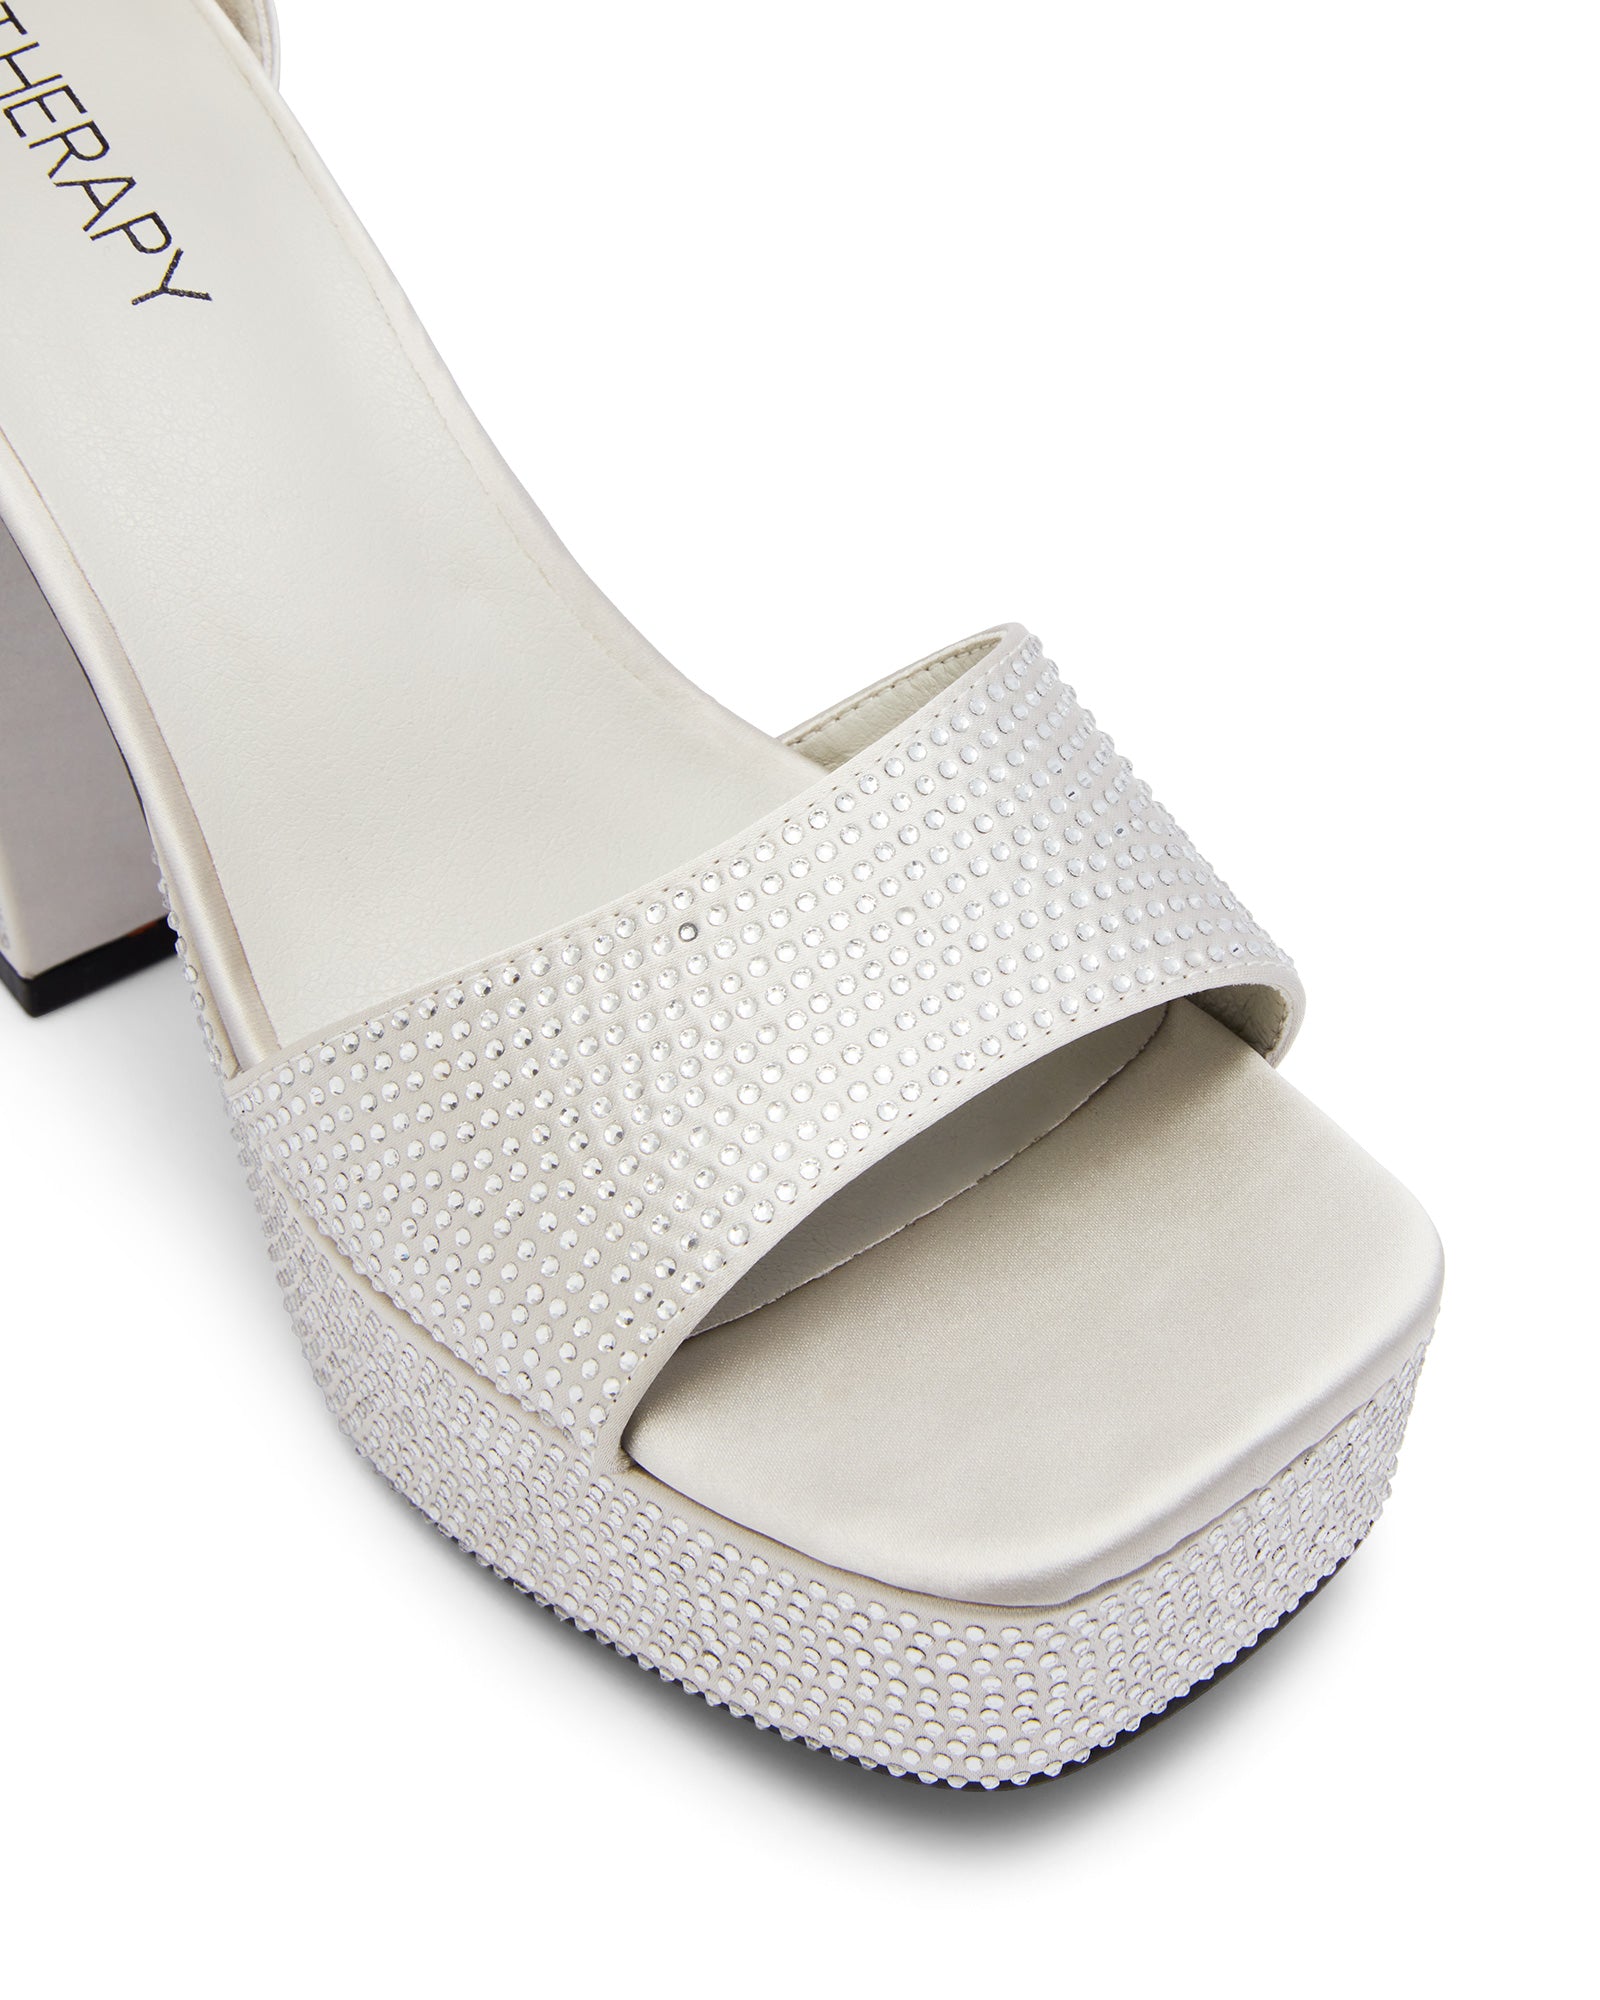 Therapy Shoes Moda Silver Satin | Women's Heels | Sandals | Platform | Rhinestone